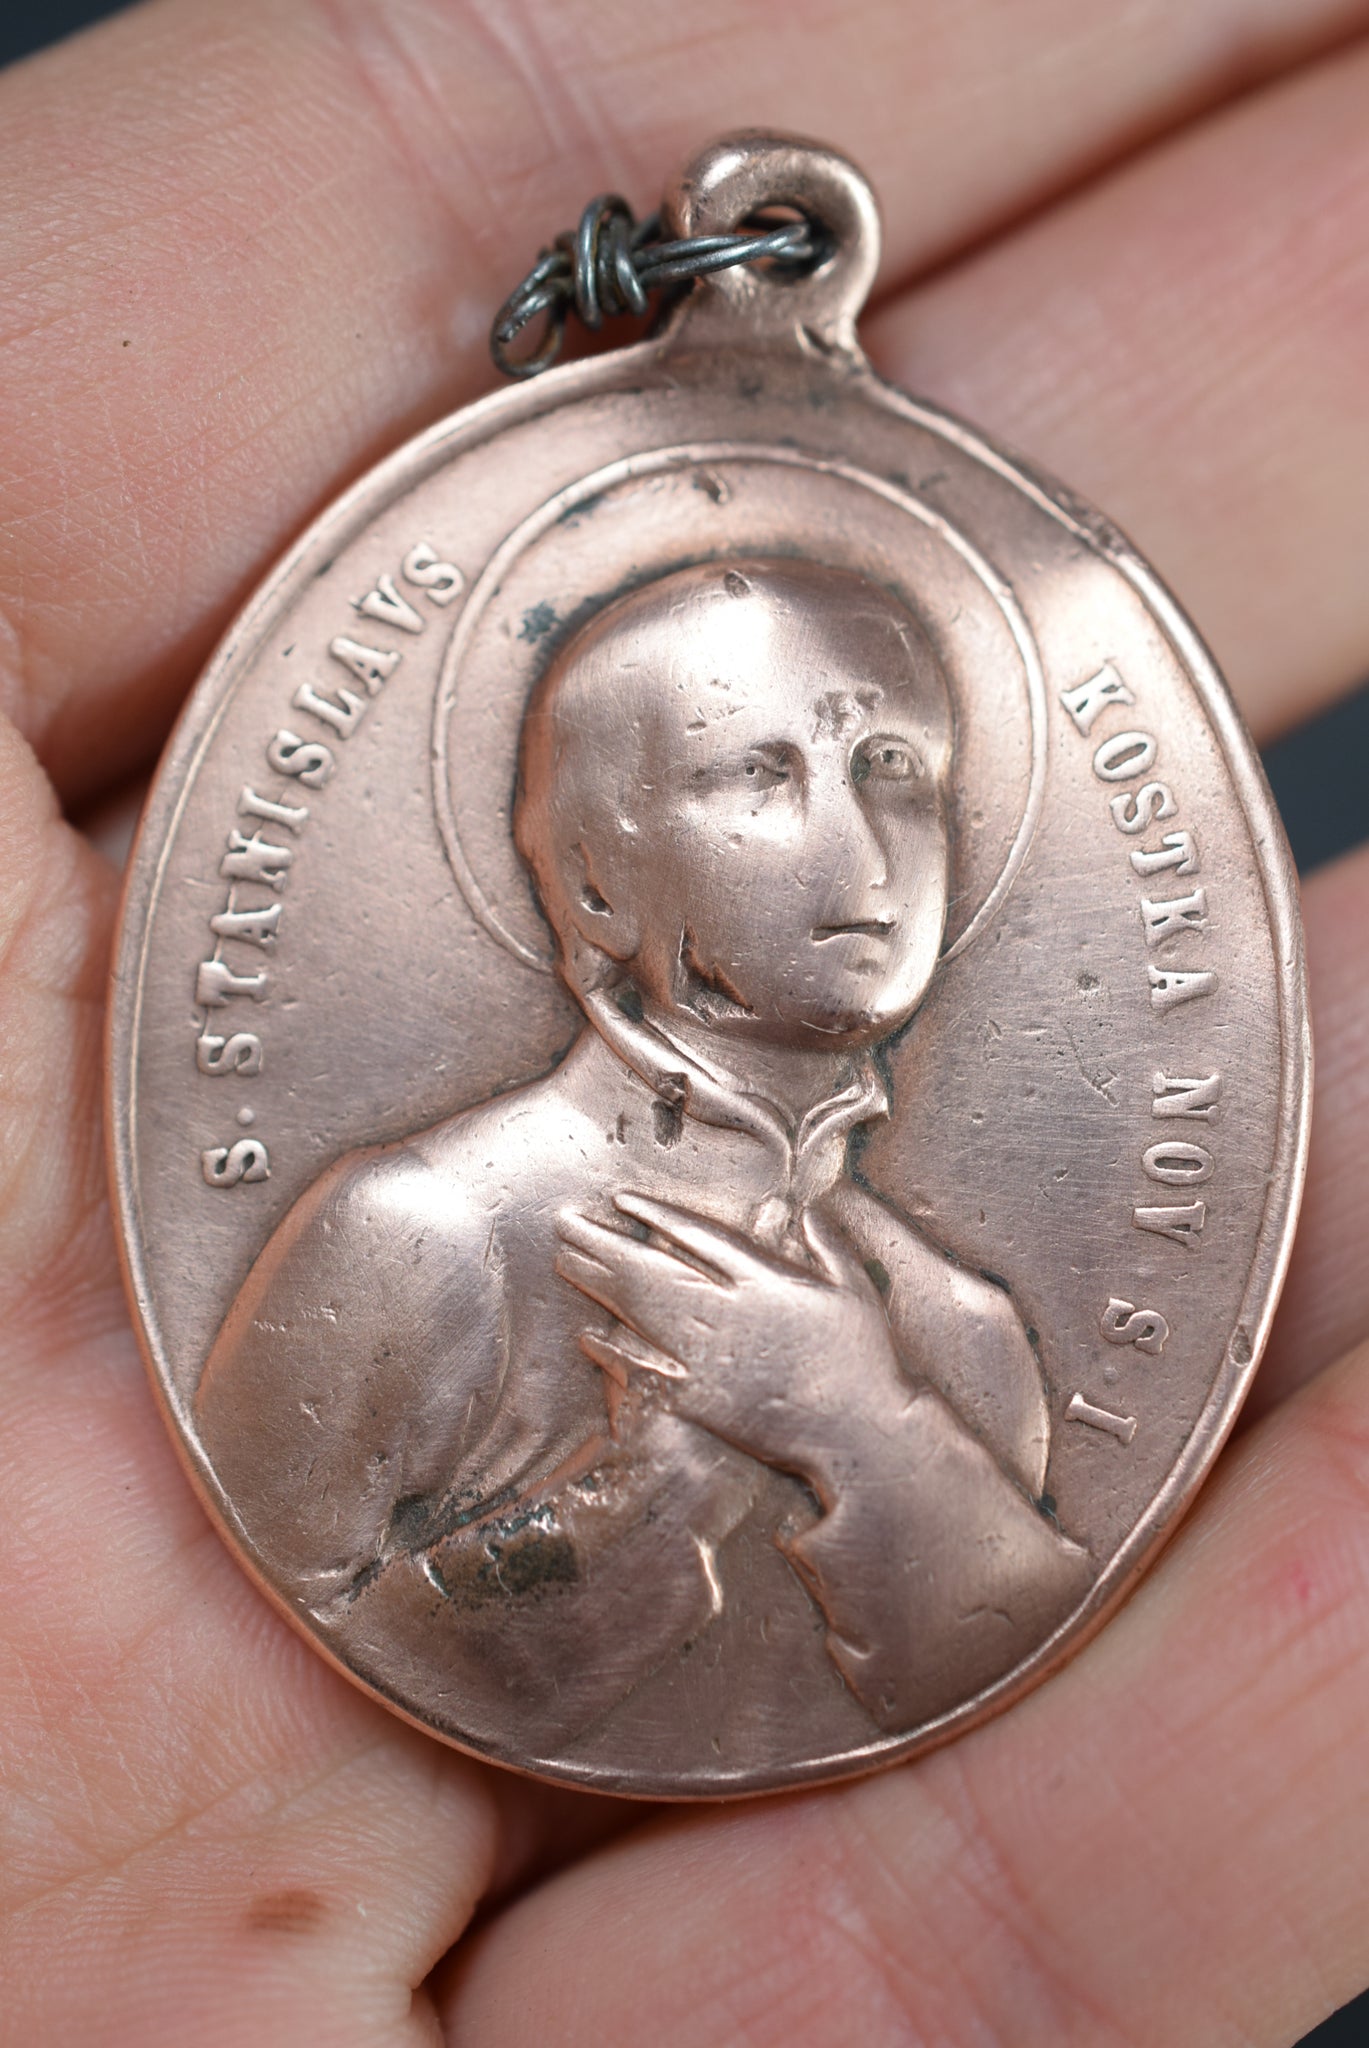 St Stanislaus Medal